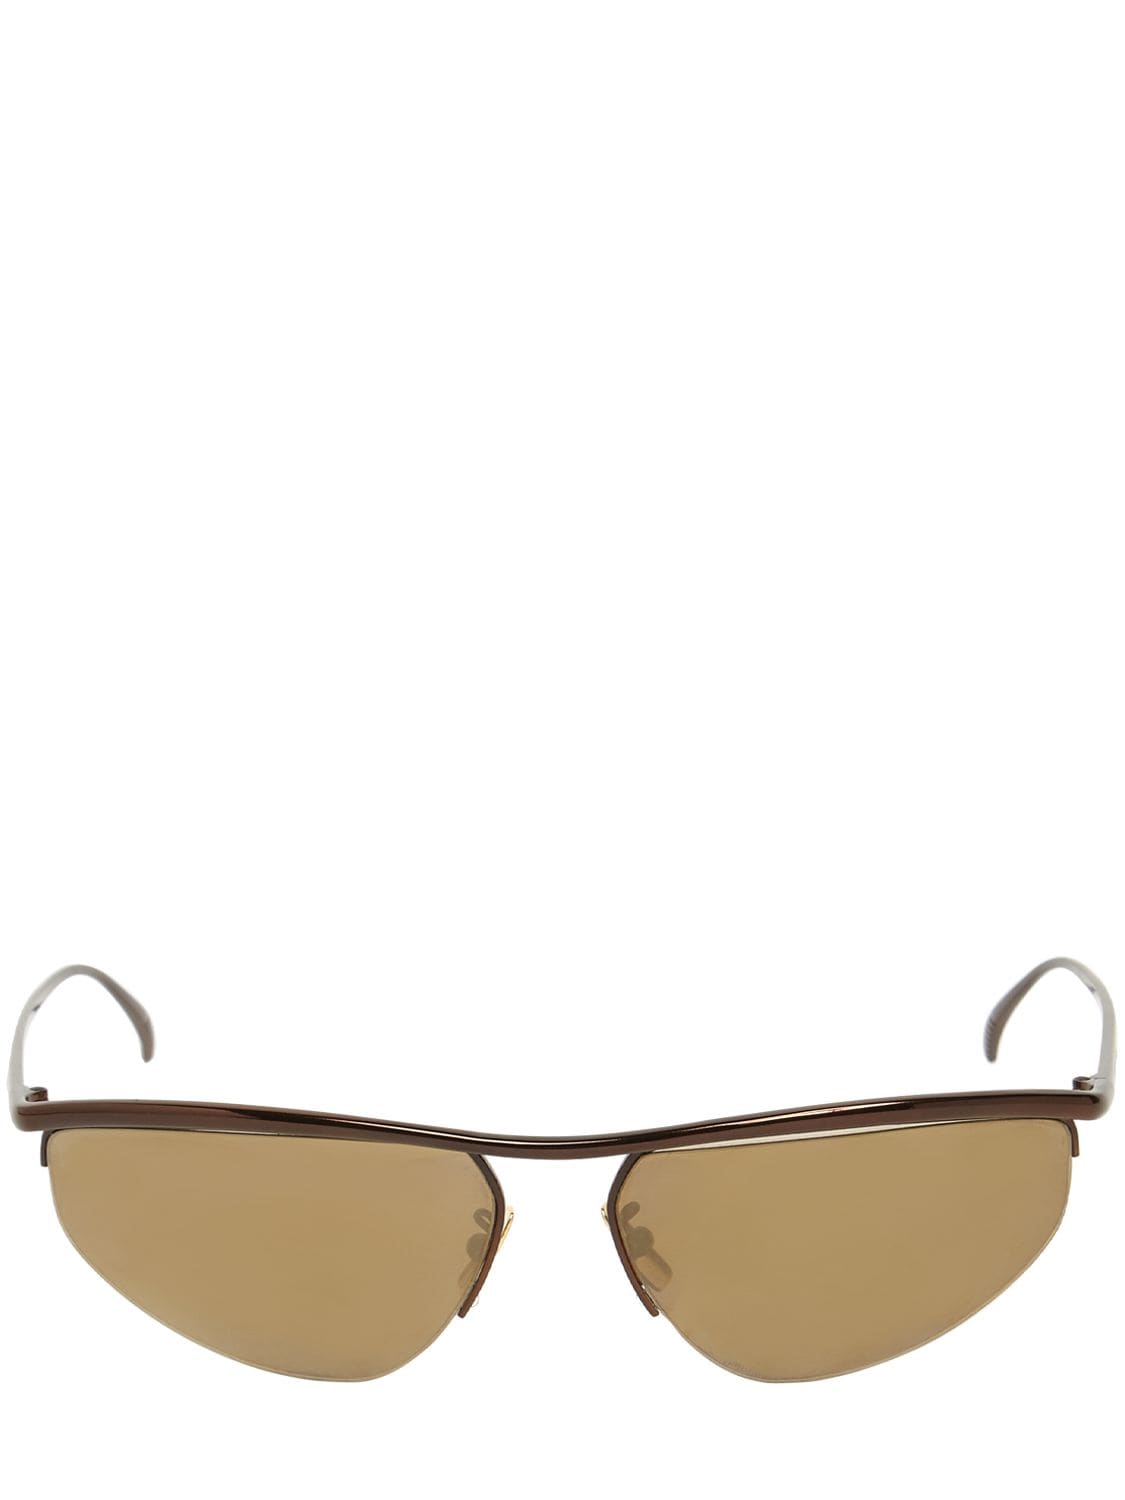 Bv1091s Oval Metal Sunglasses